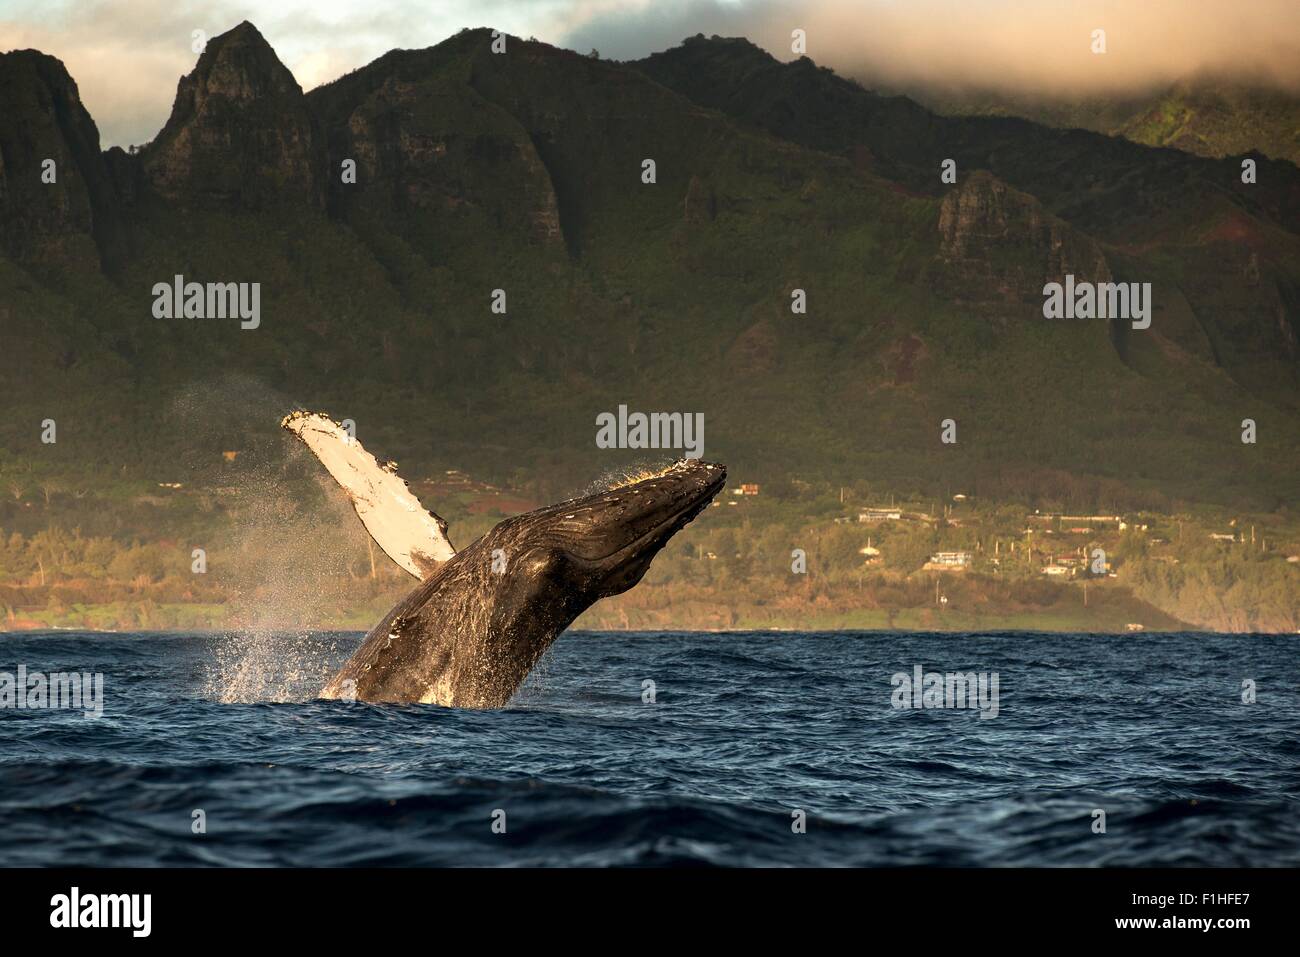 Humpback whale jumping out of water, Kauai island, Hawaii islands, USA Stock Photo